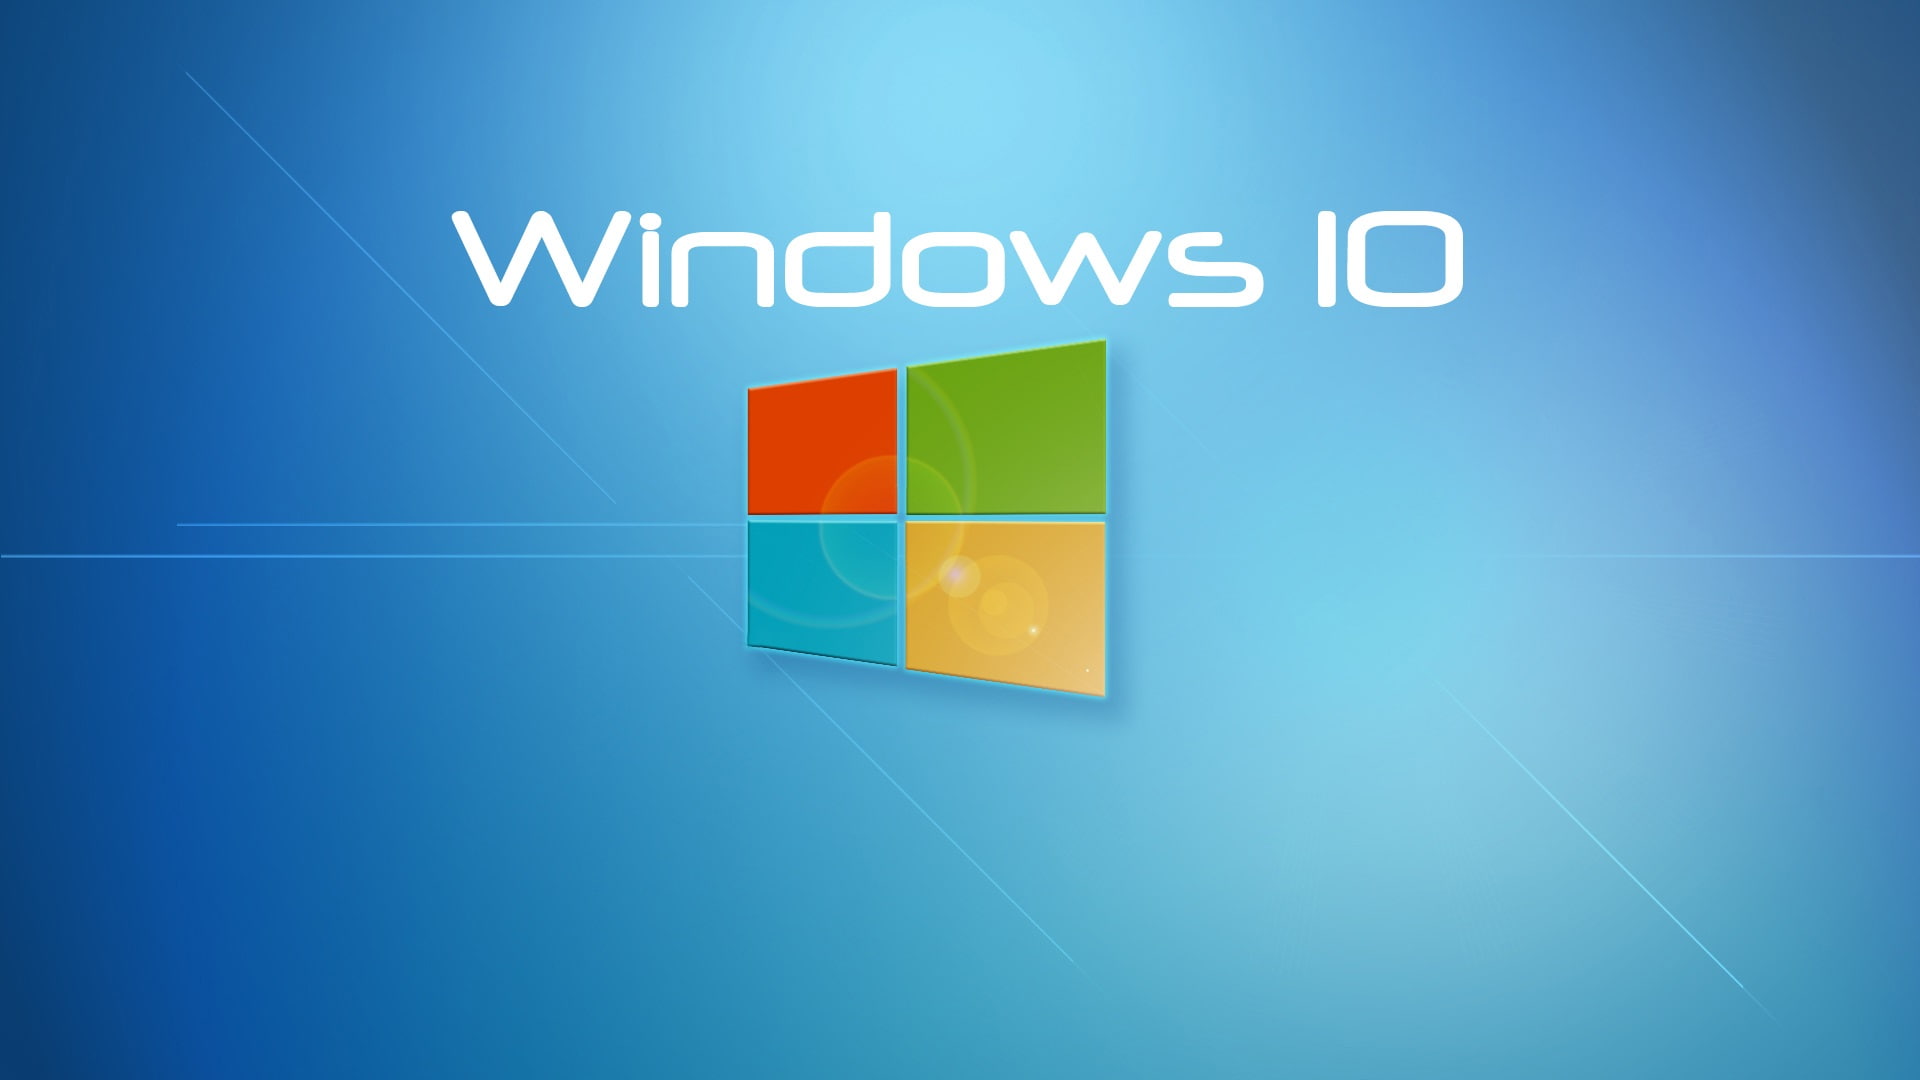 Windows 10 system, blue background, windows 10 logo